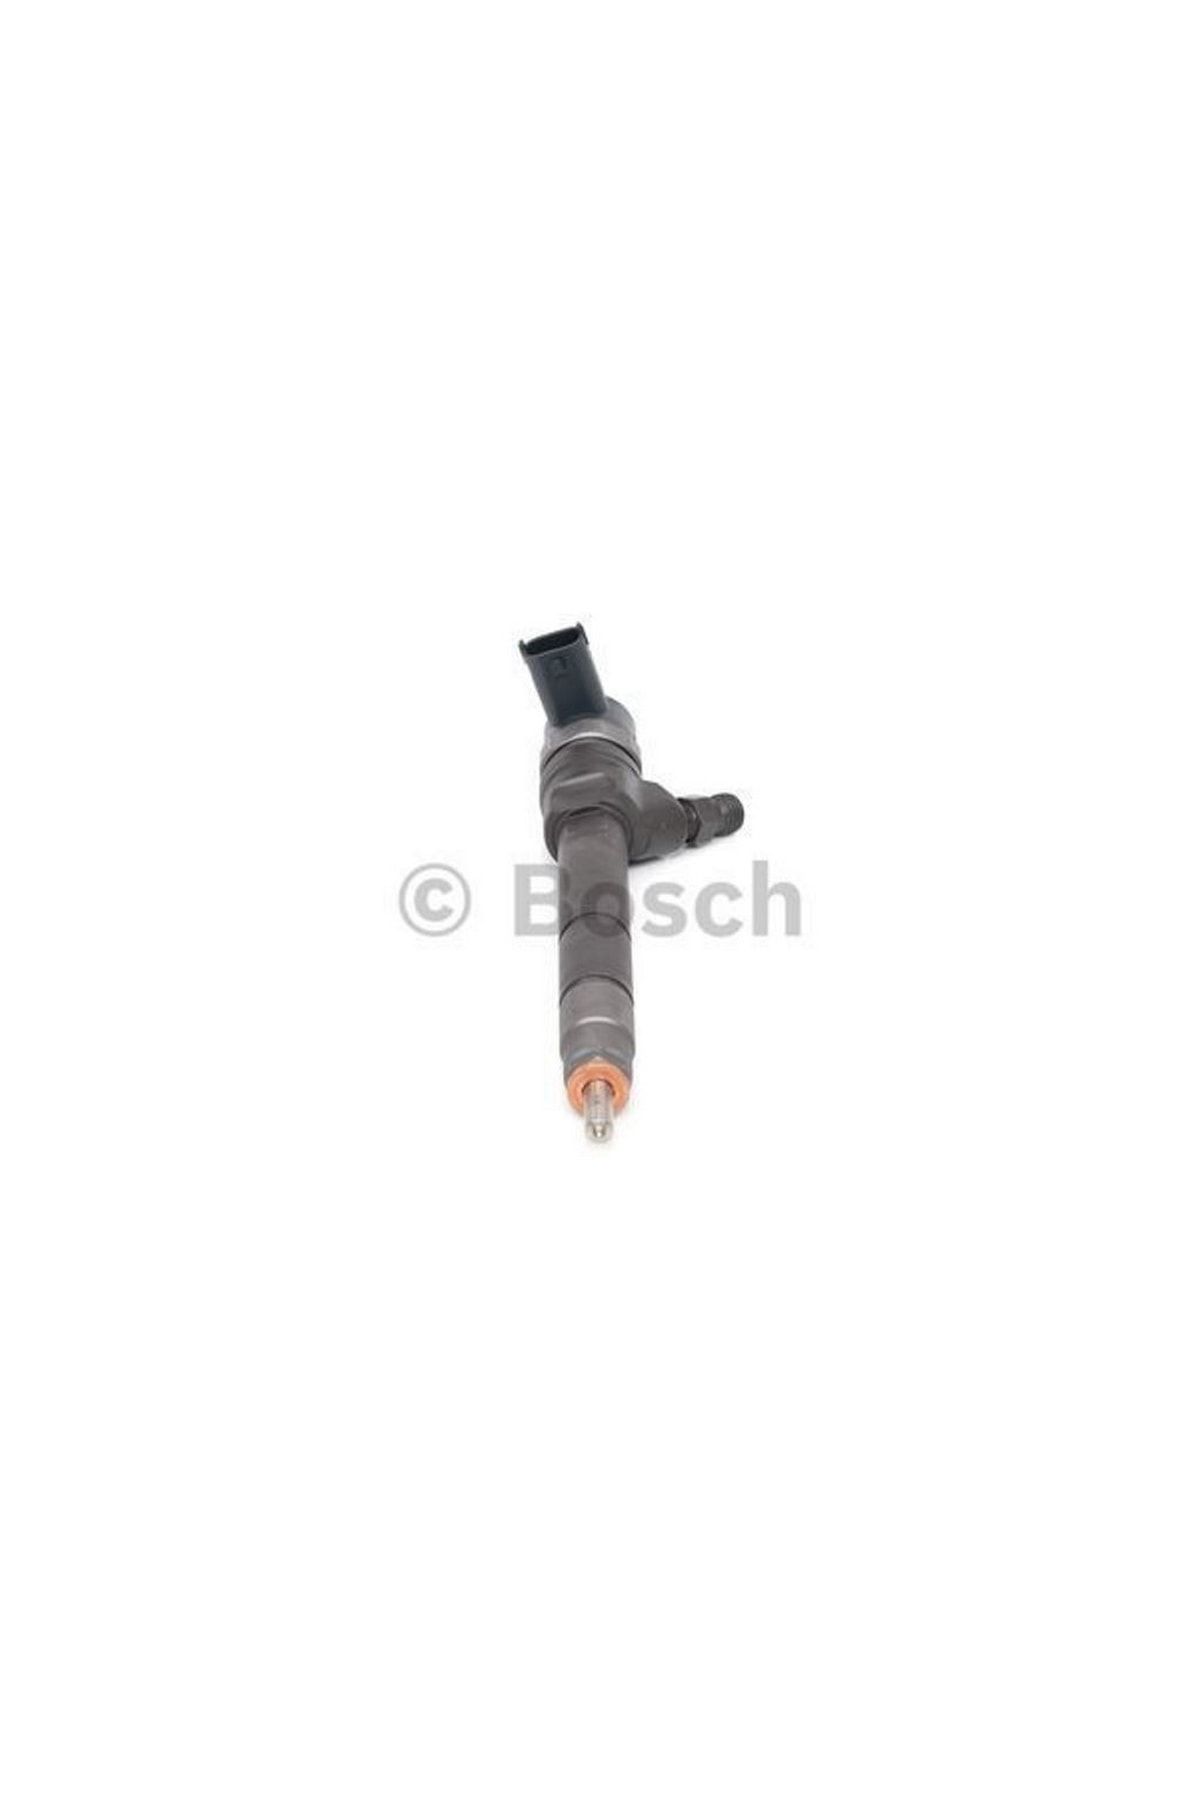 Bosch Enjektör [ Renault Trafic Iı , Opel Vivaro 2.0 Dci 2006 - ]